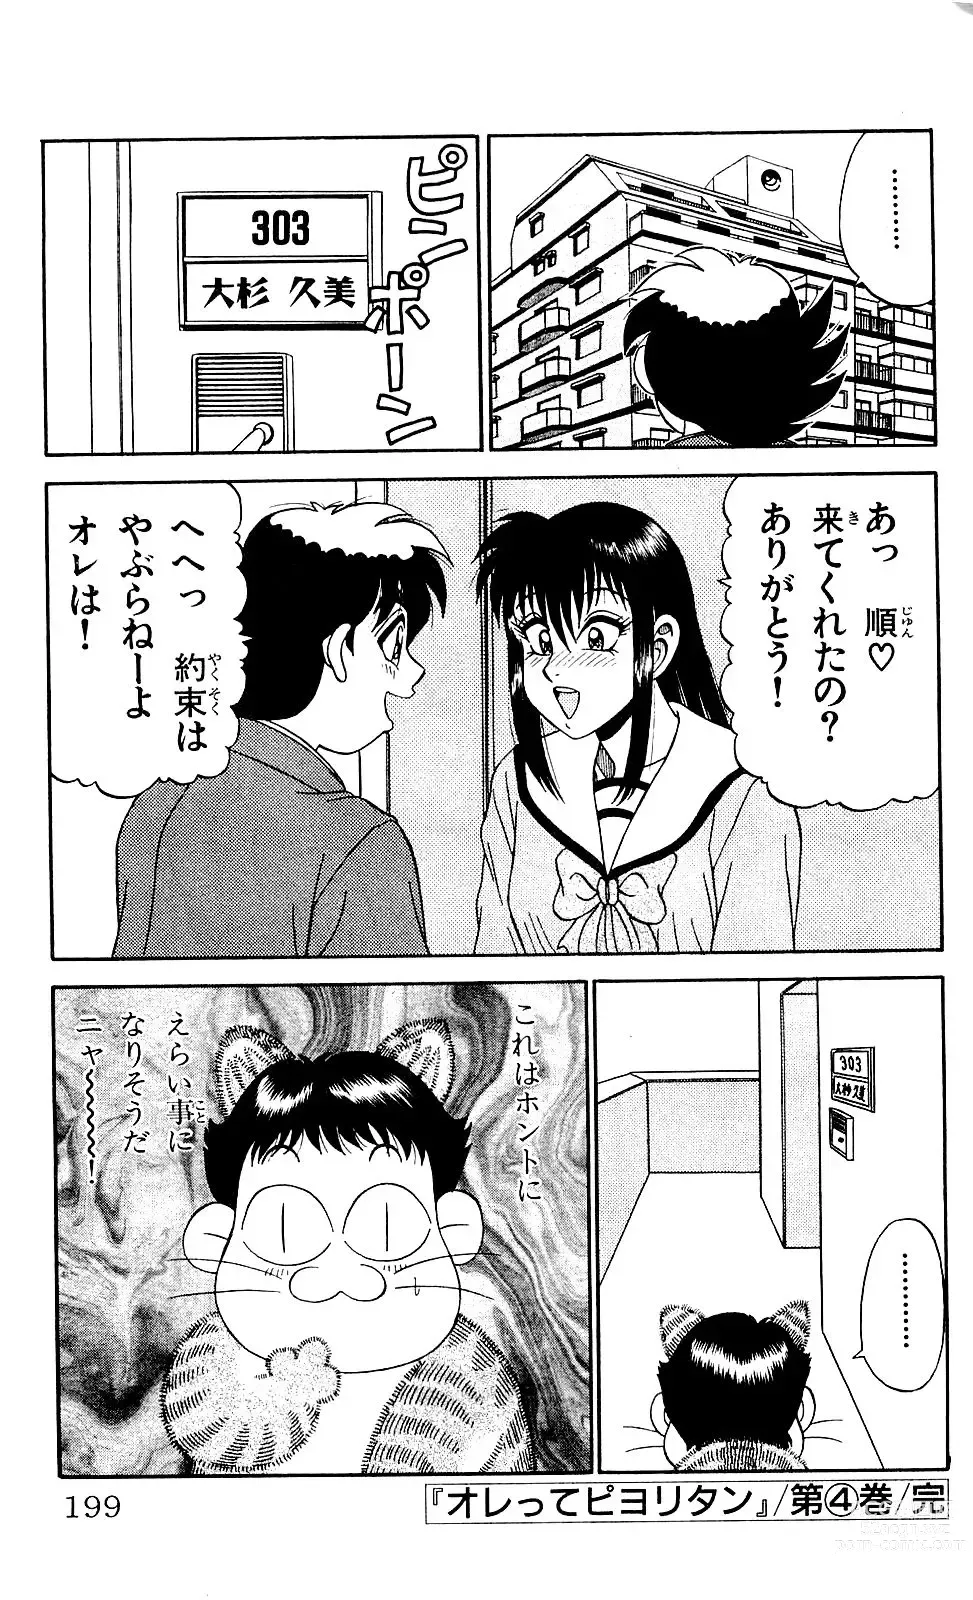 Page 197 of manga Orette Piyoritan 04